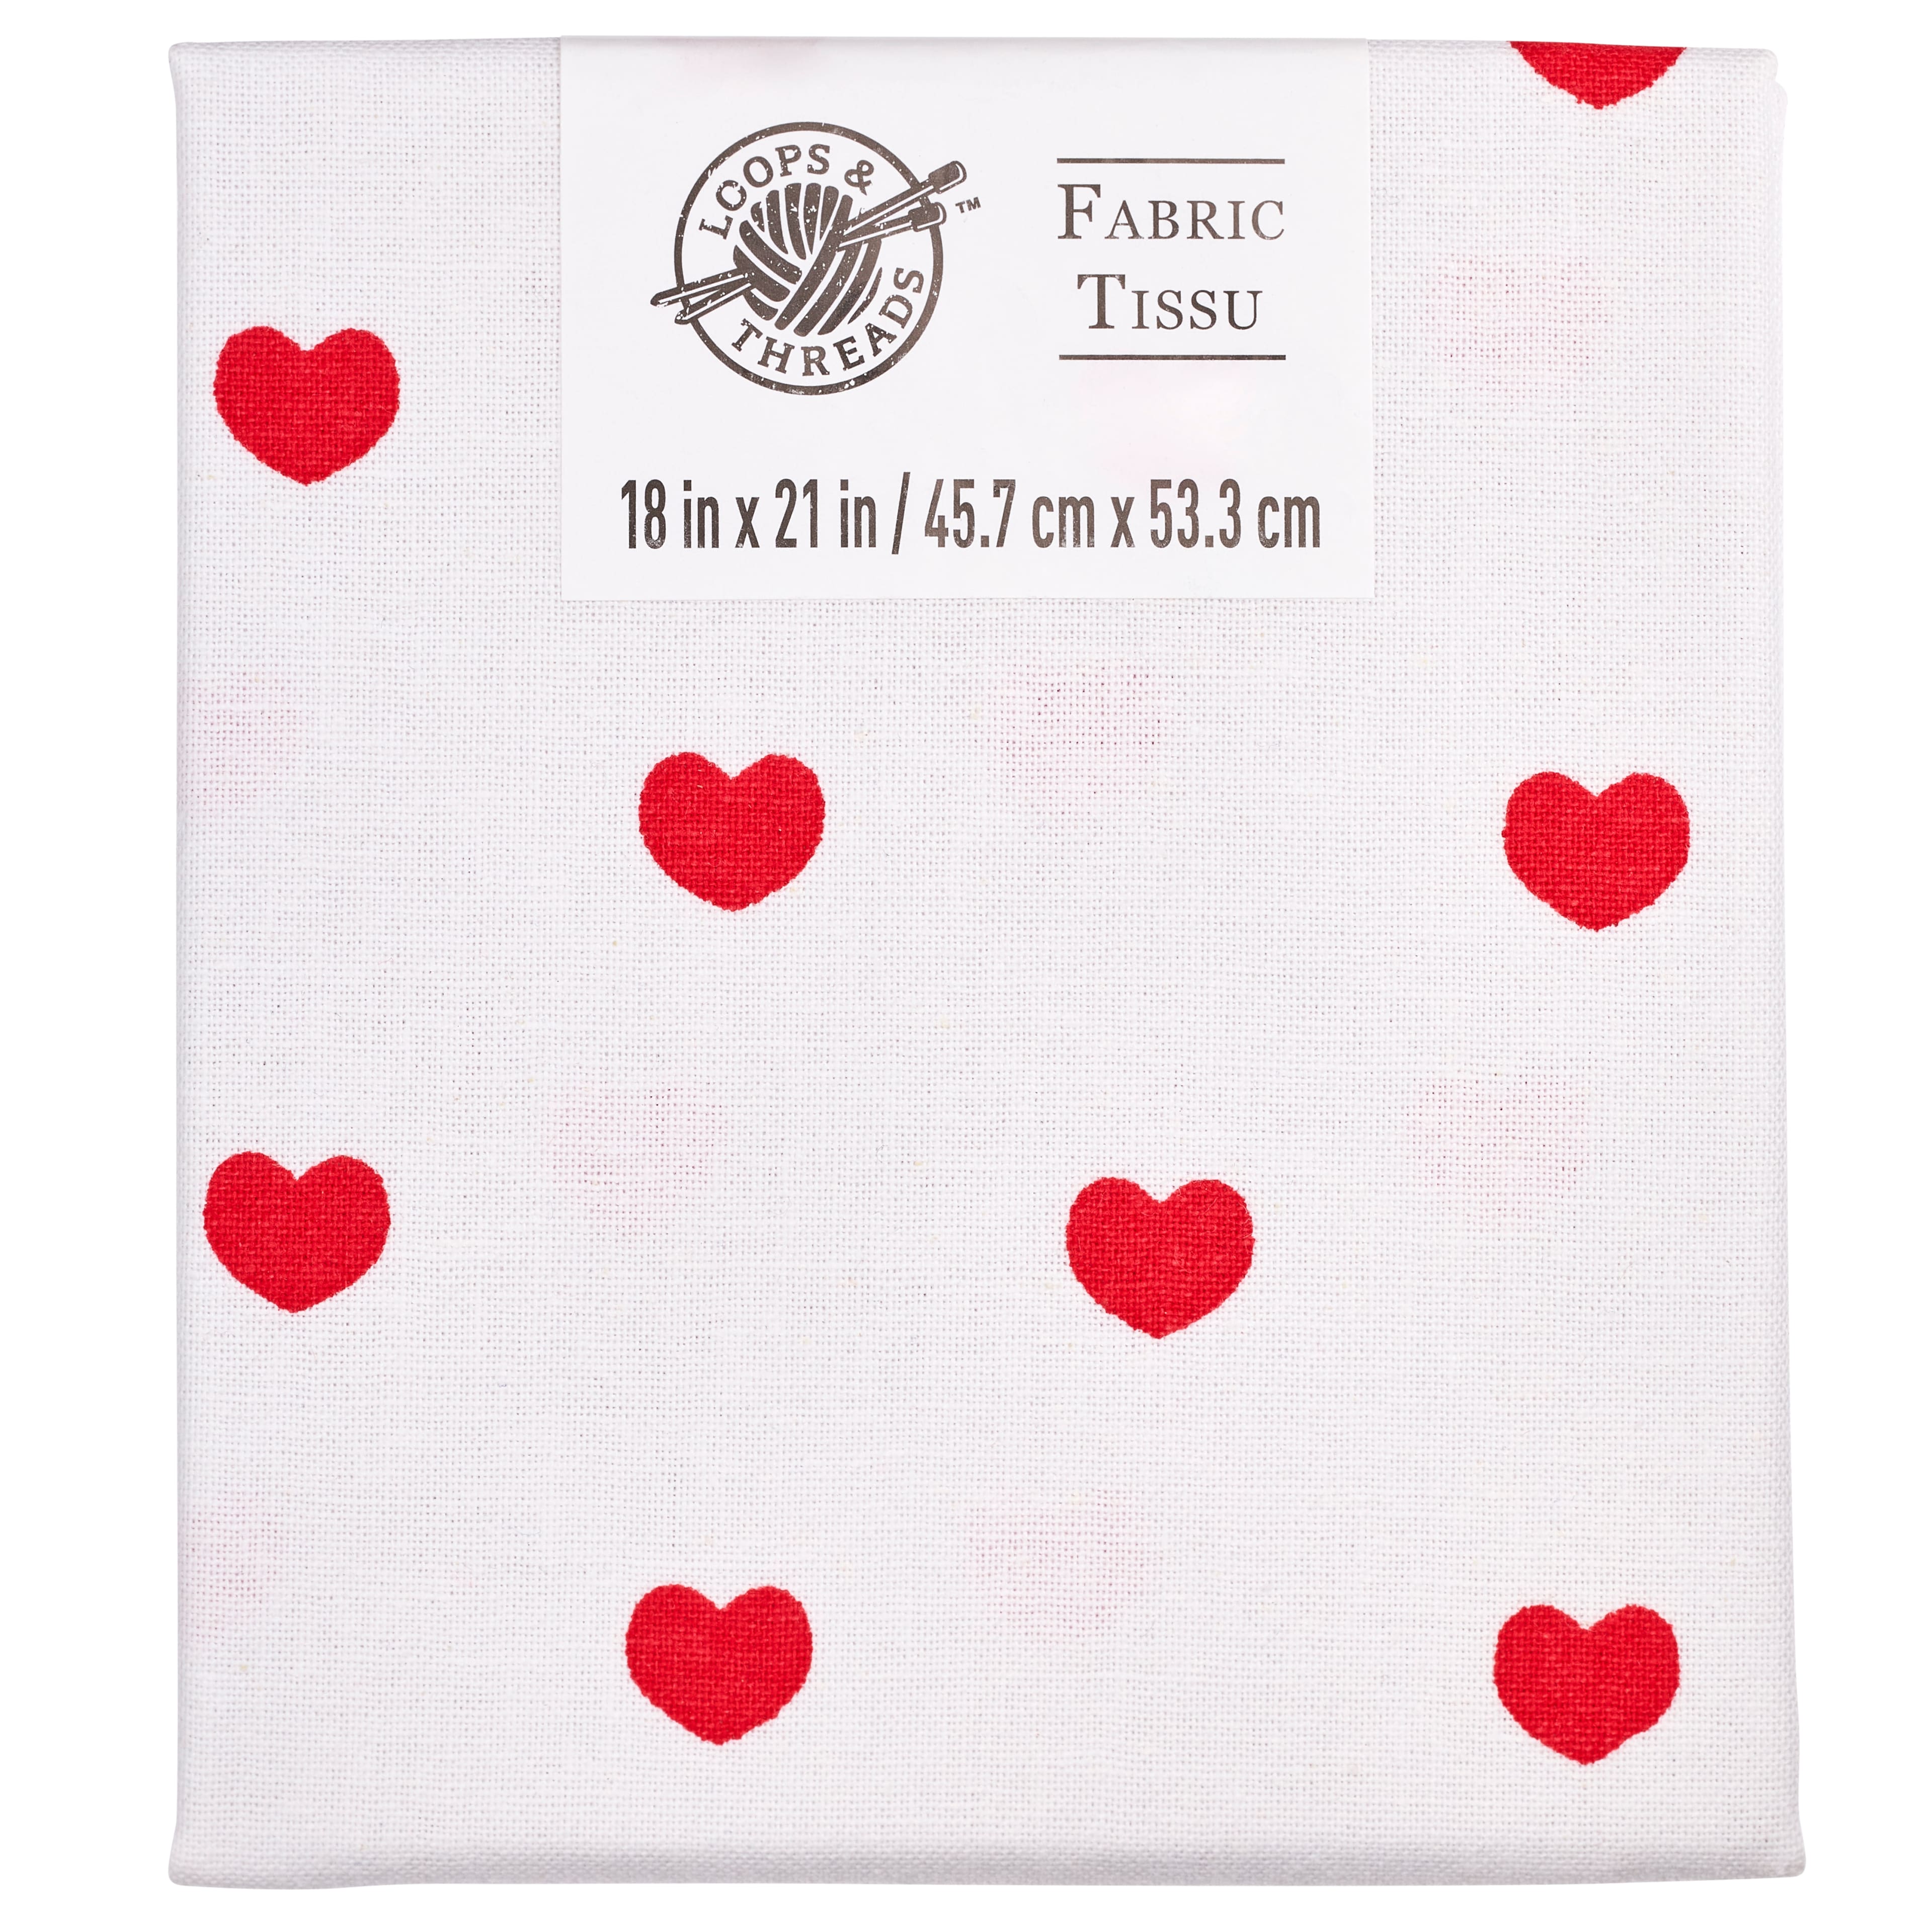 500 pcs Fabric Love Hearts  gift box decoration scrapbooking card making 